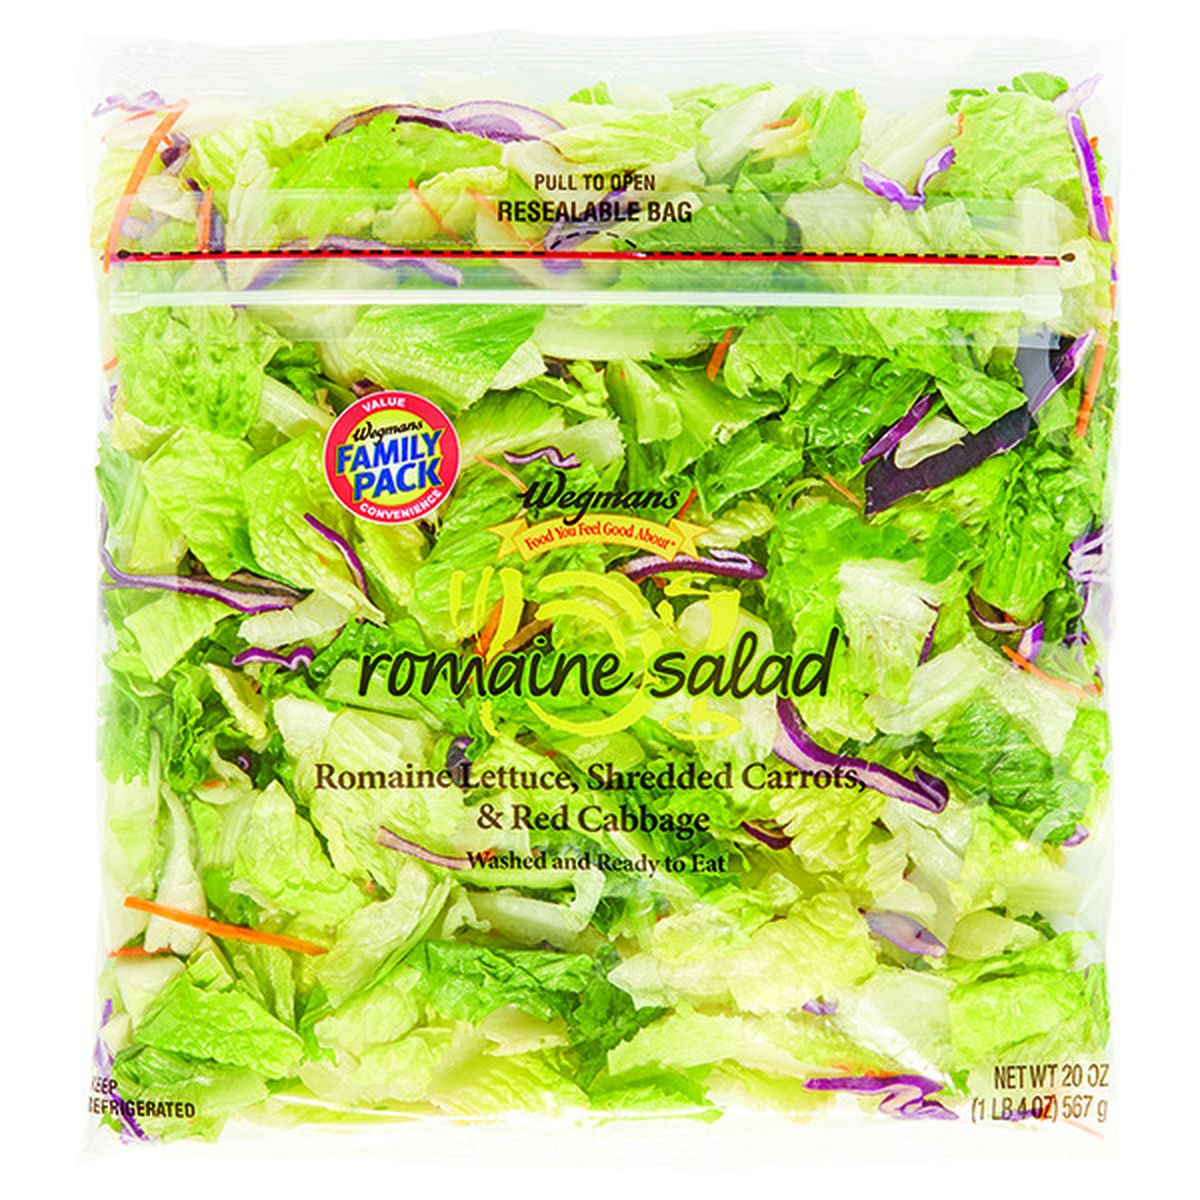 Calories in Wegmans Romaine Salad, FAMILY PACK